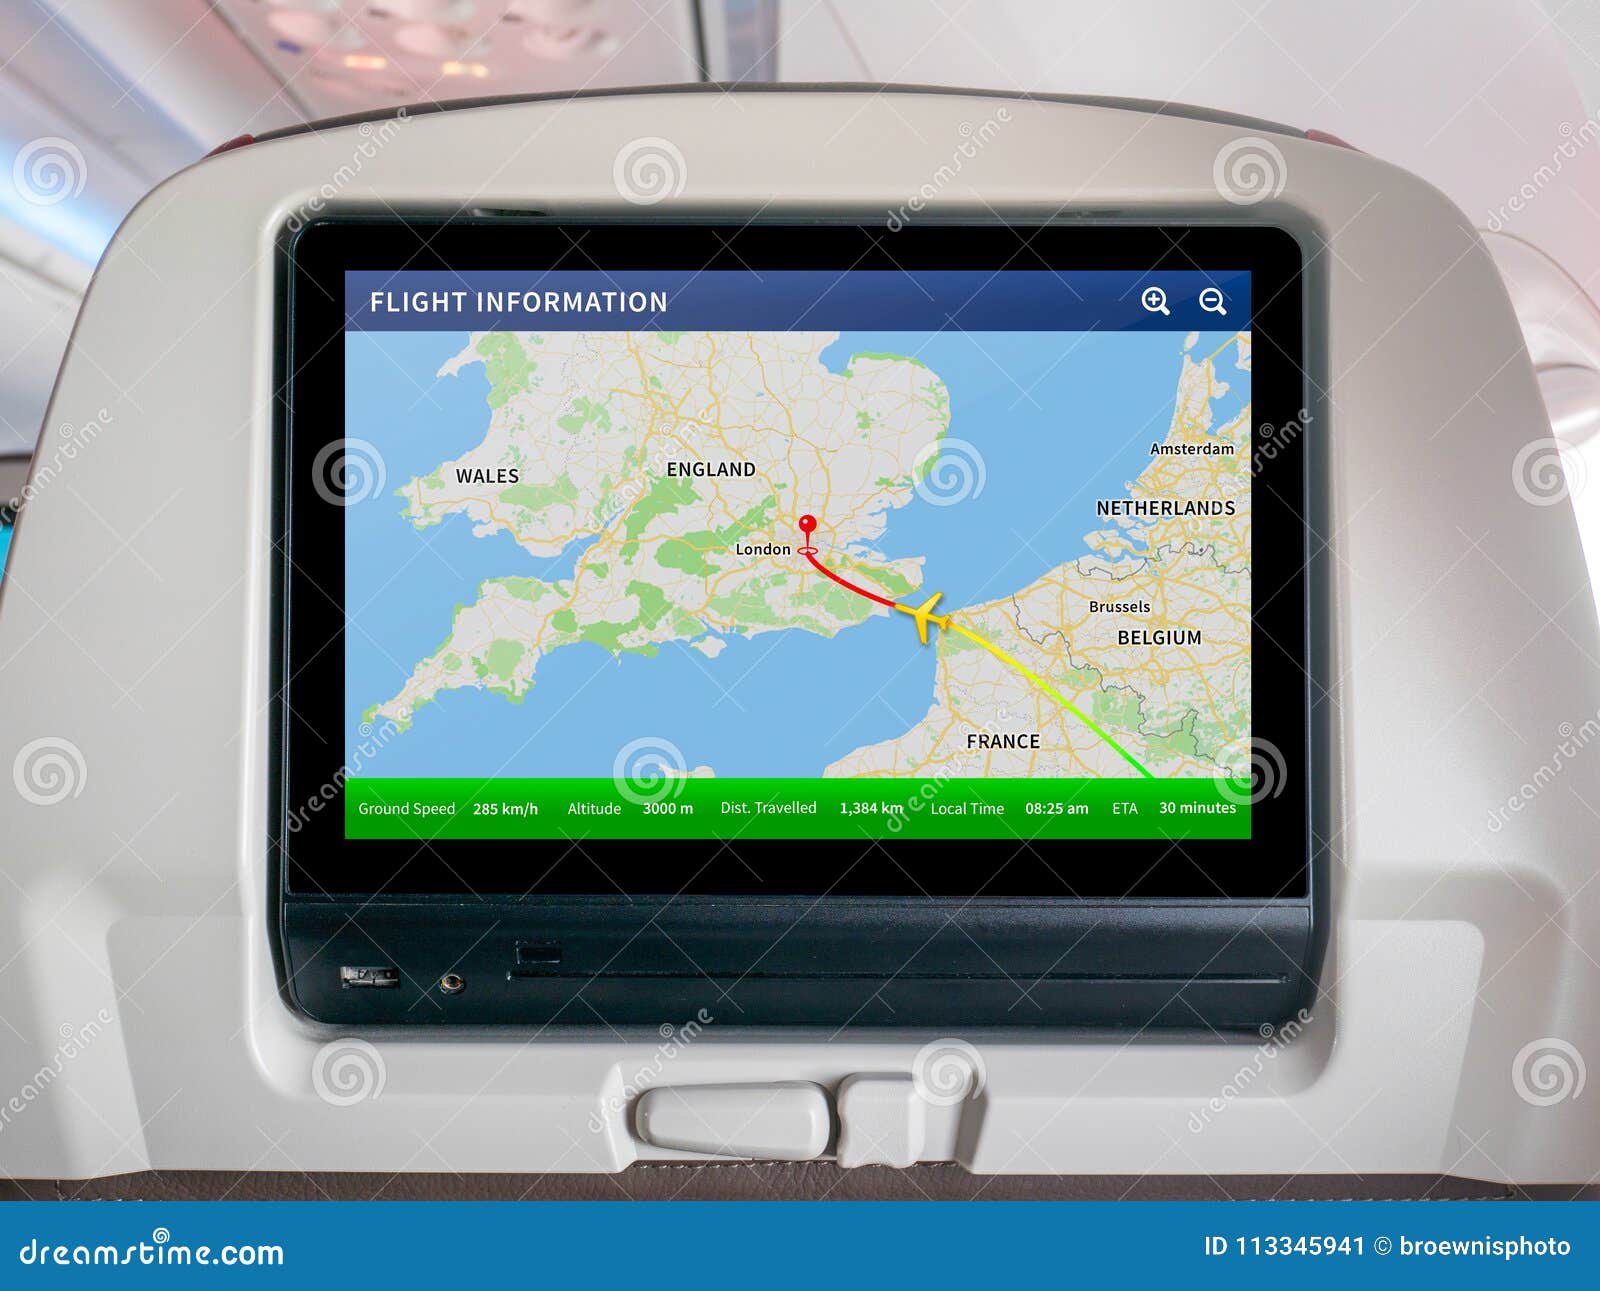 inflight progress map screen, in-flight map screen, flight screen, flight tracker